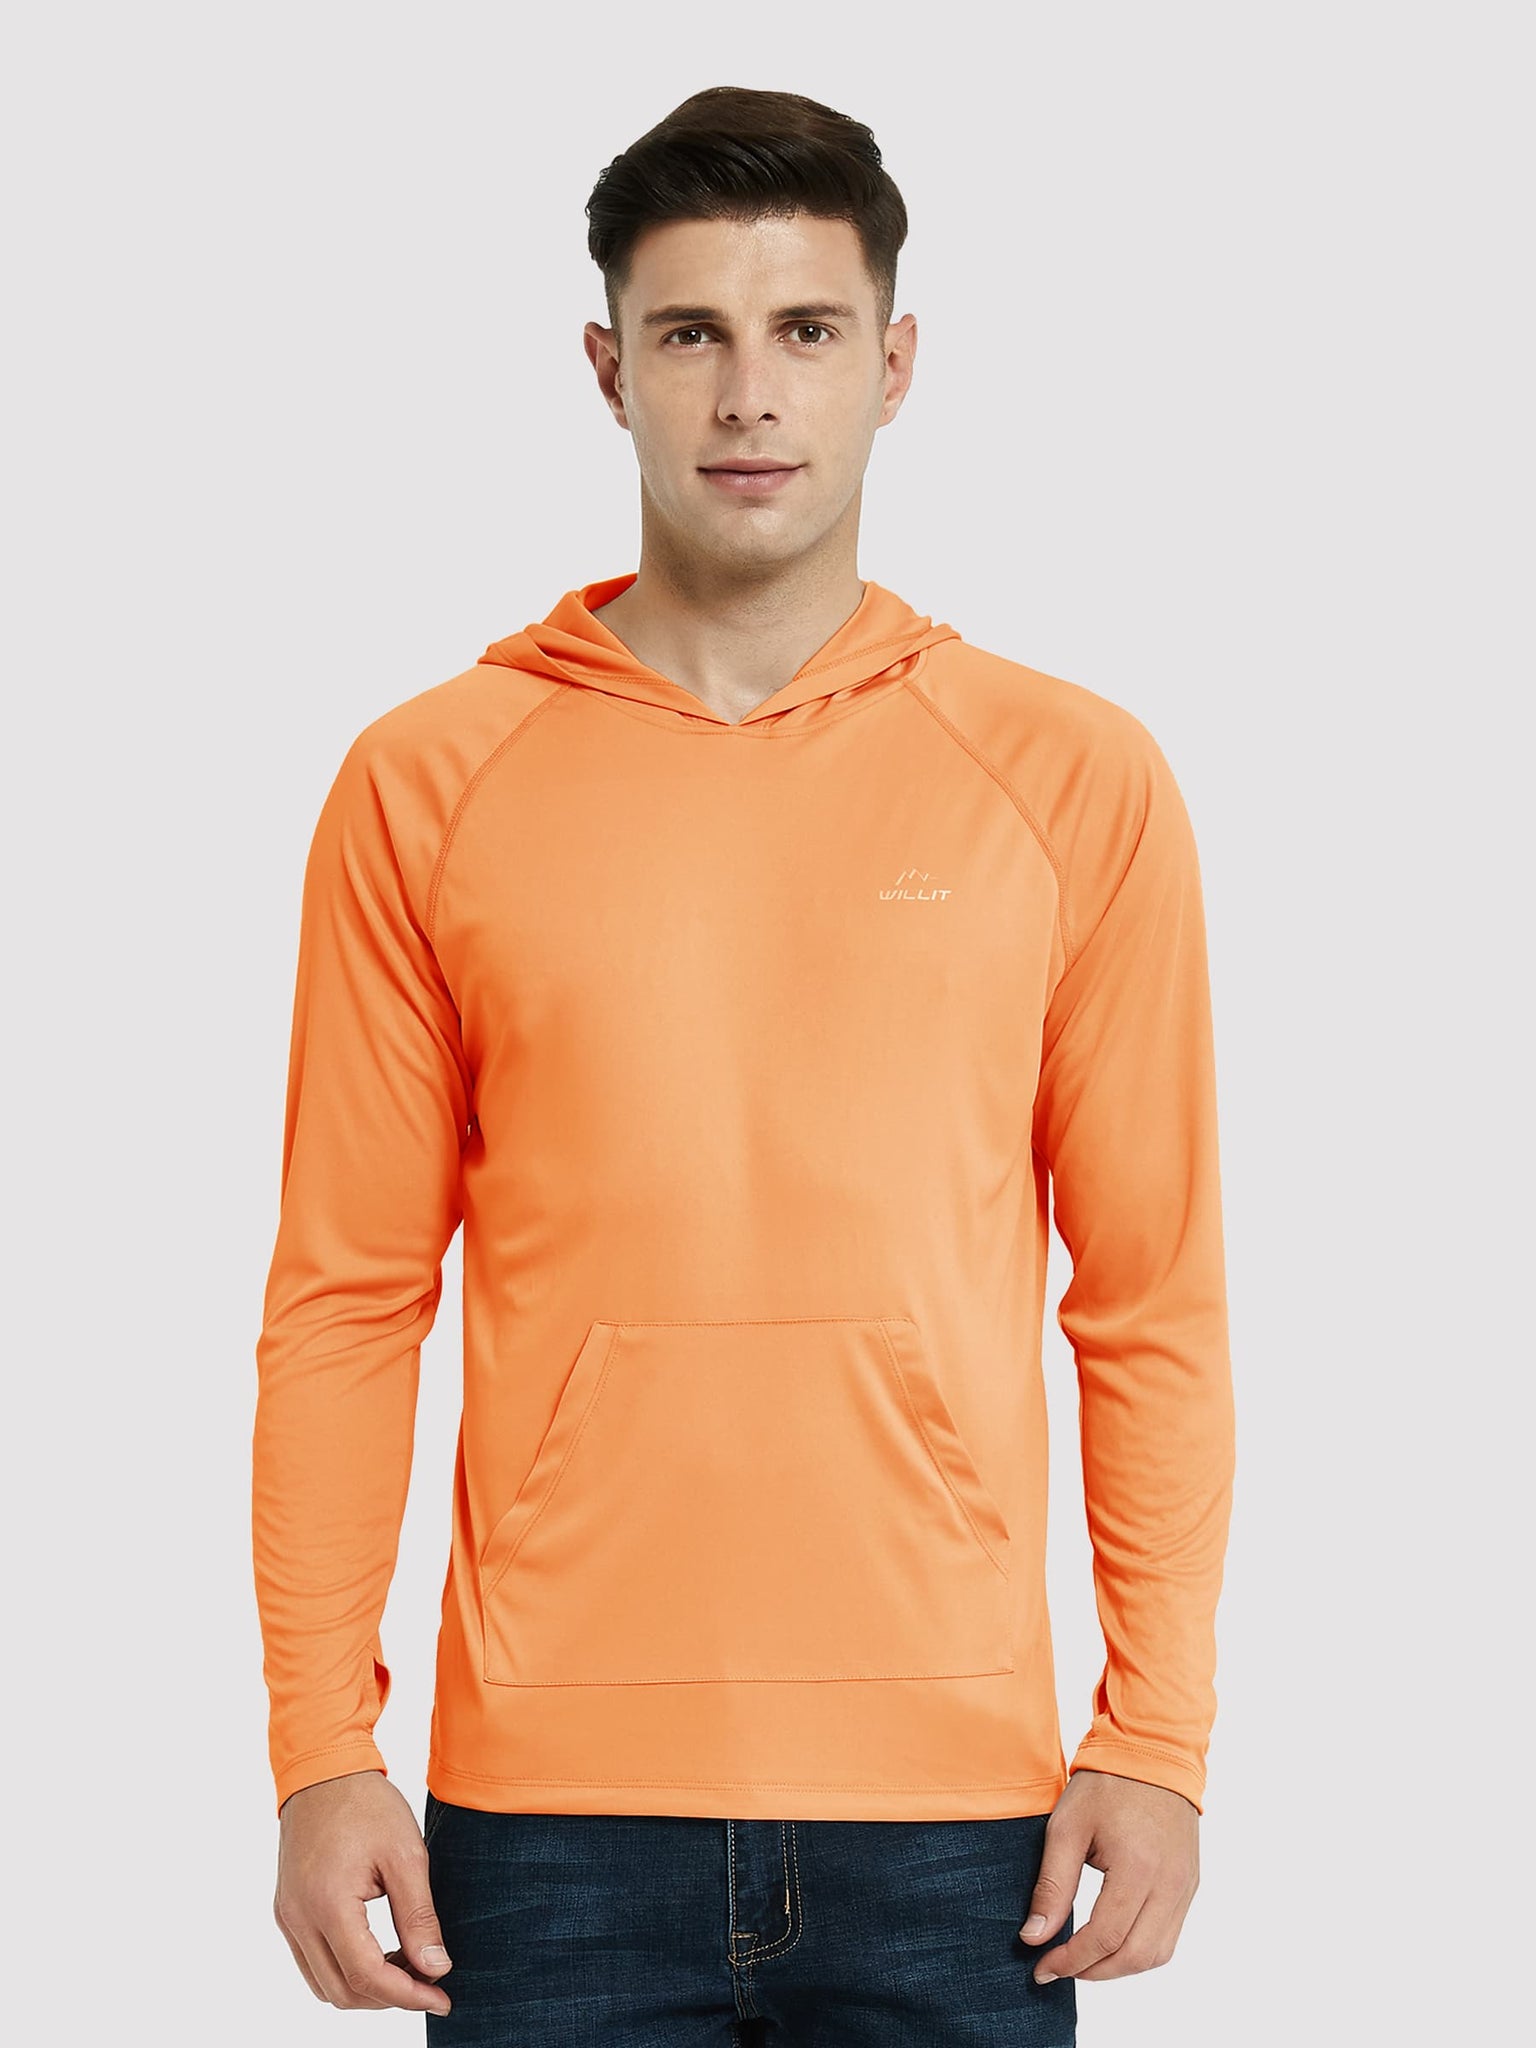 Men's Sun Protection Long Sleeve Shirts_Orange_model3